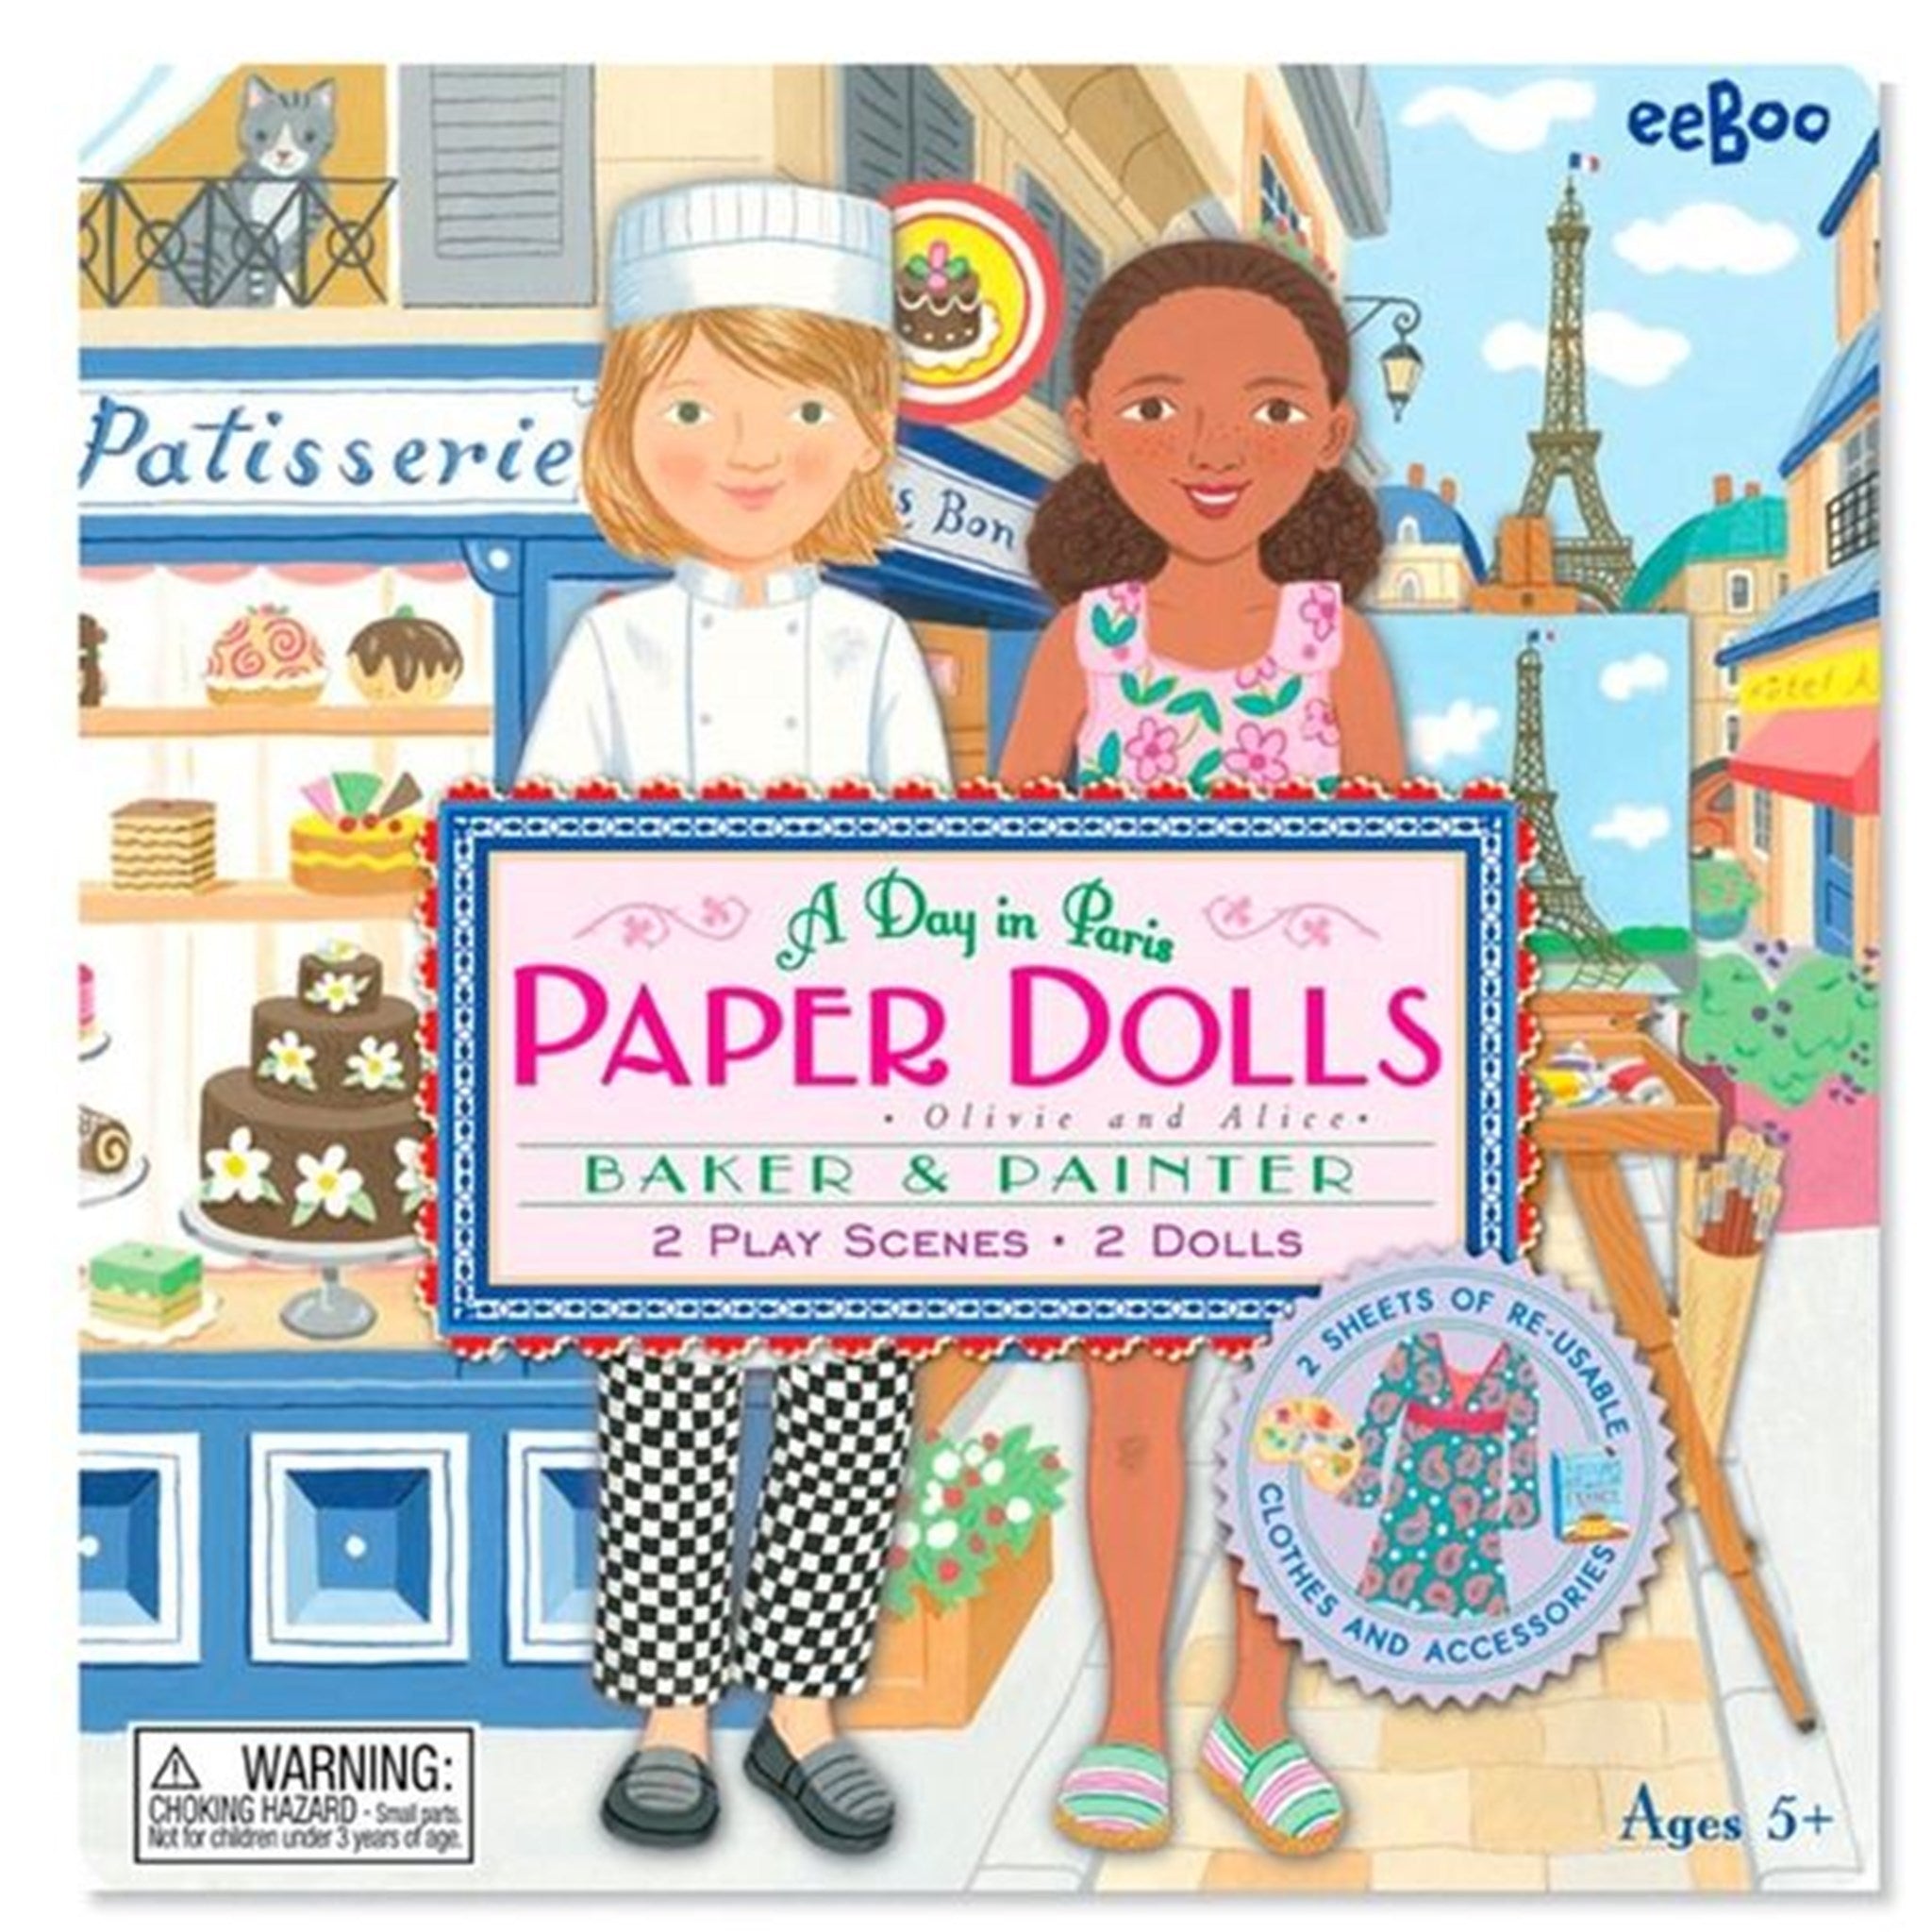 Eeboo Paper Dolls - Baker and Painter